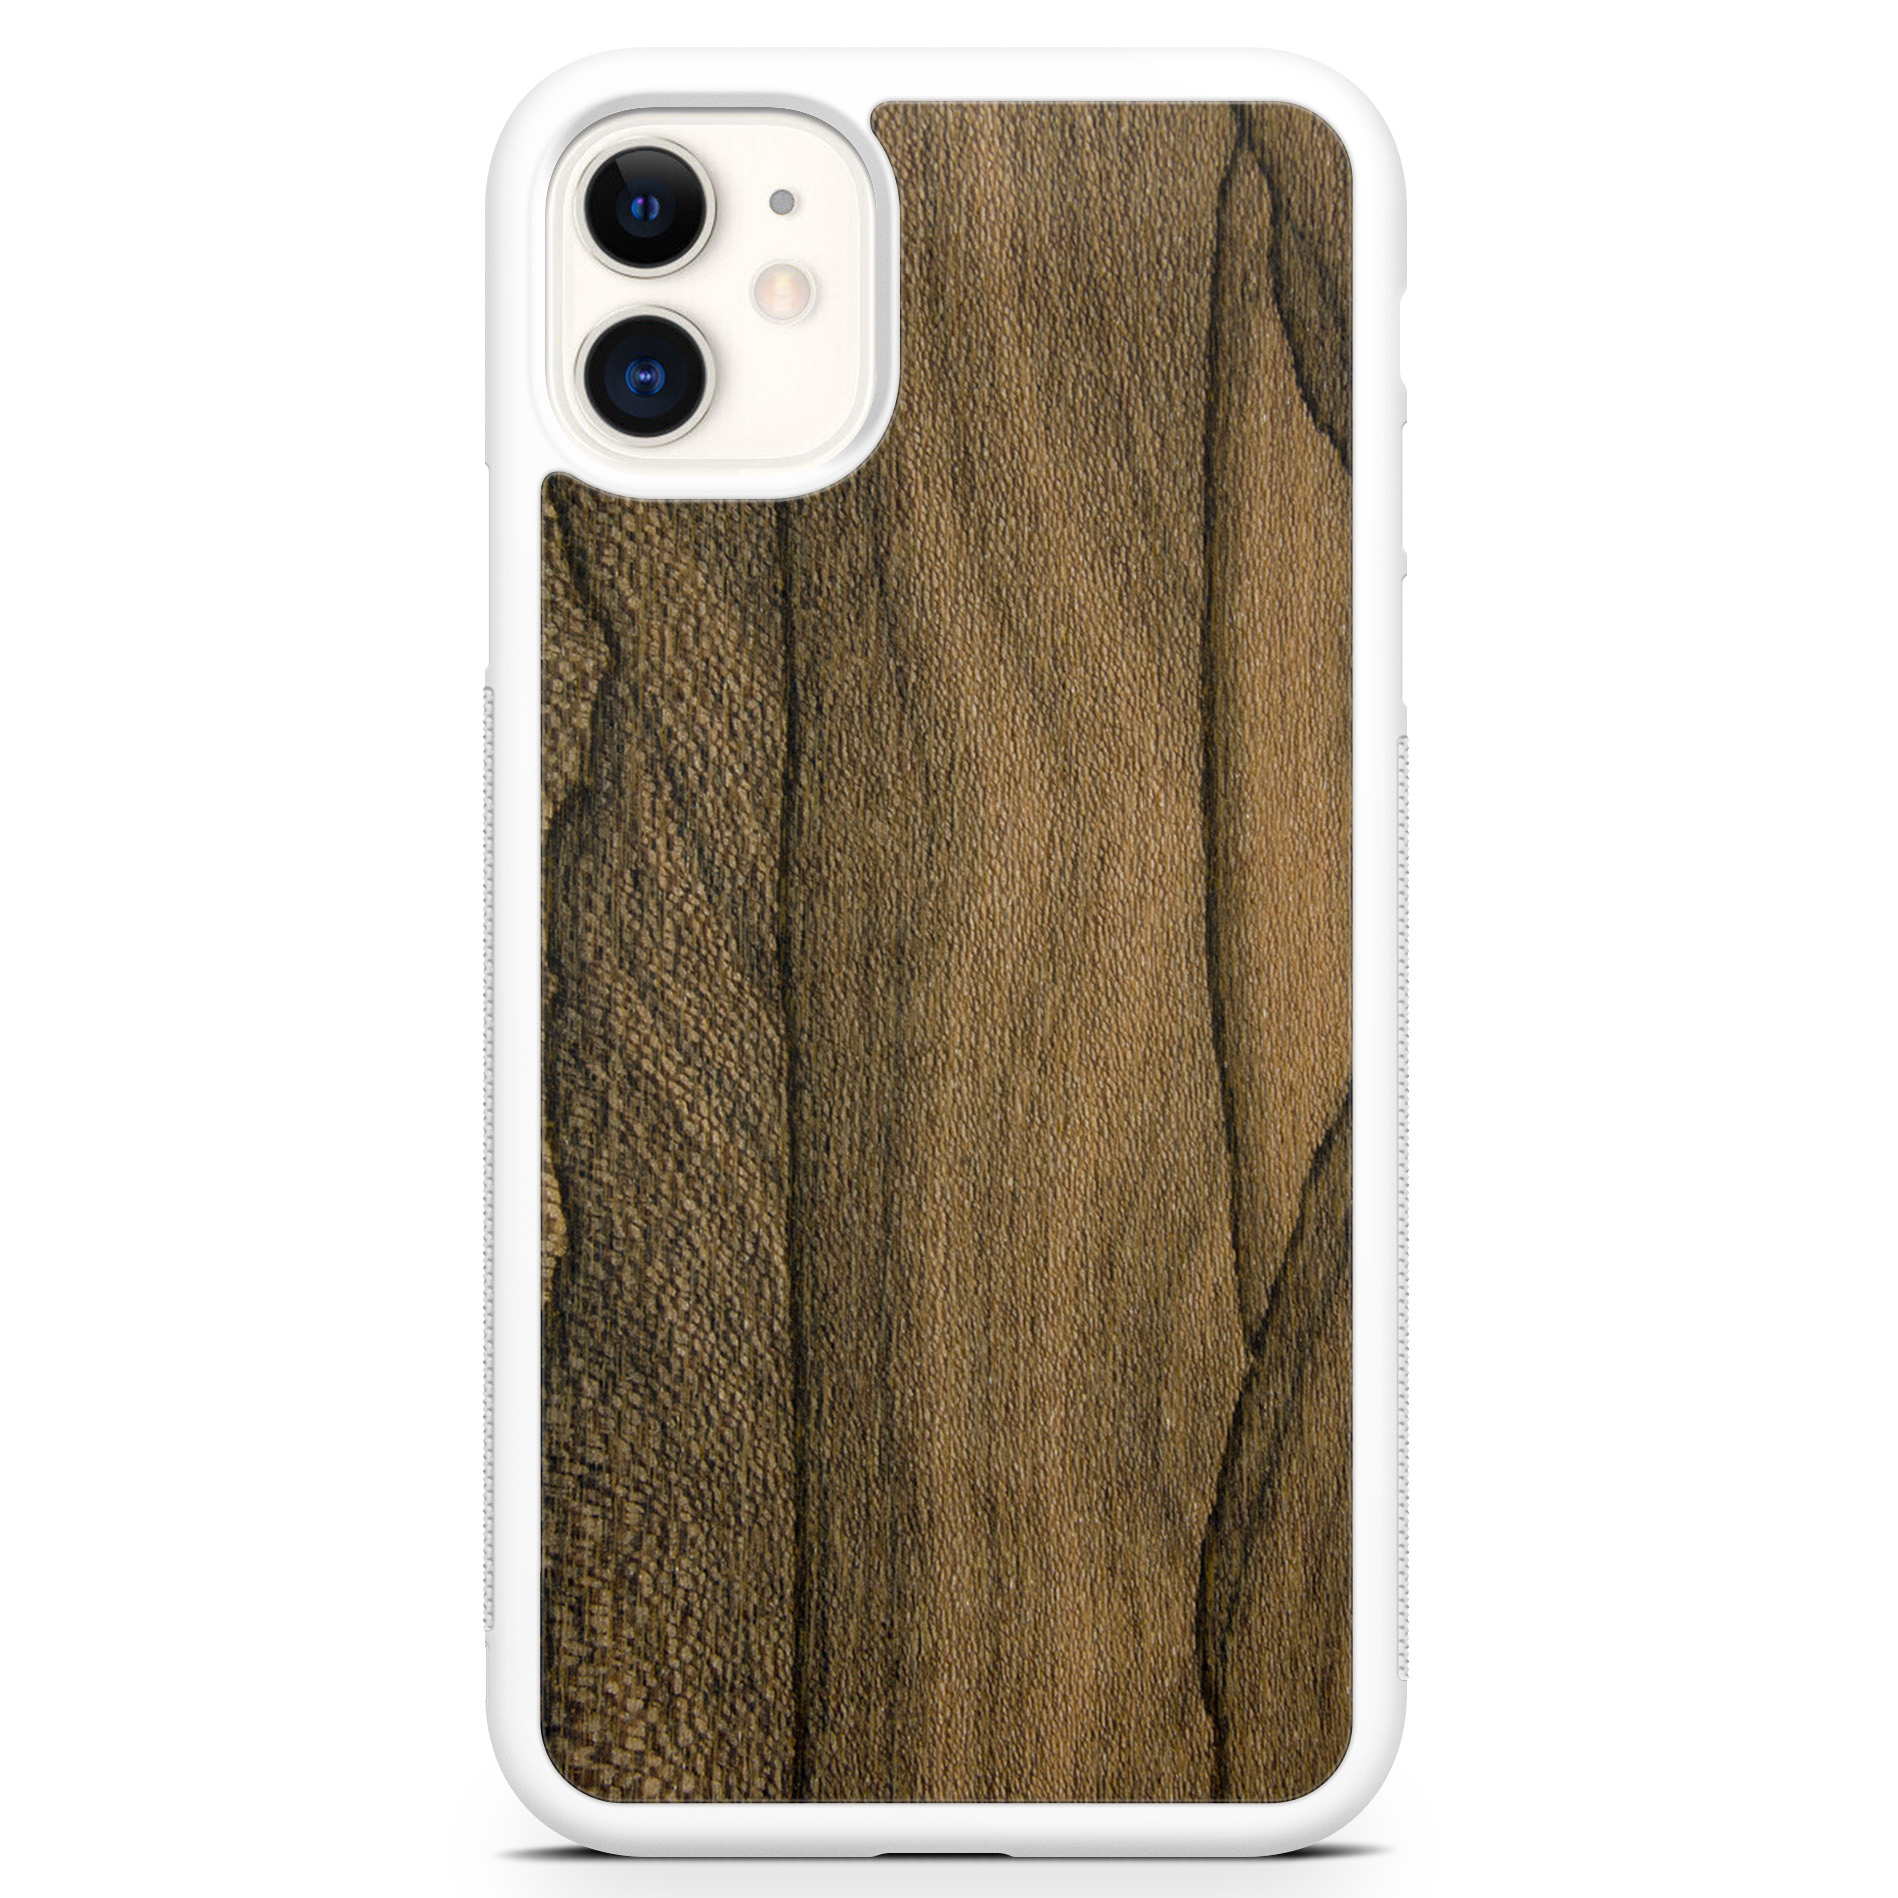 iPhone 11 Ziricote Wood White Phone Case